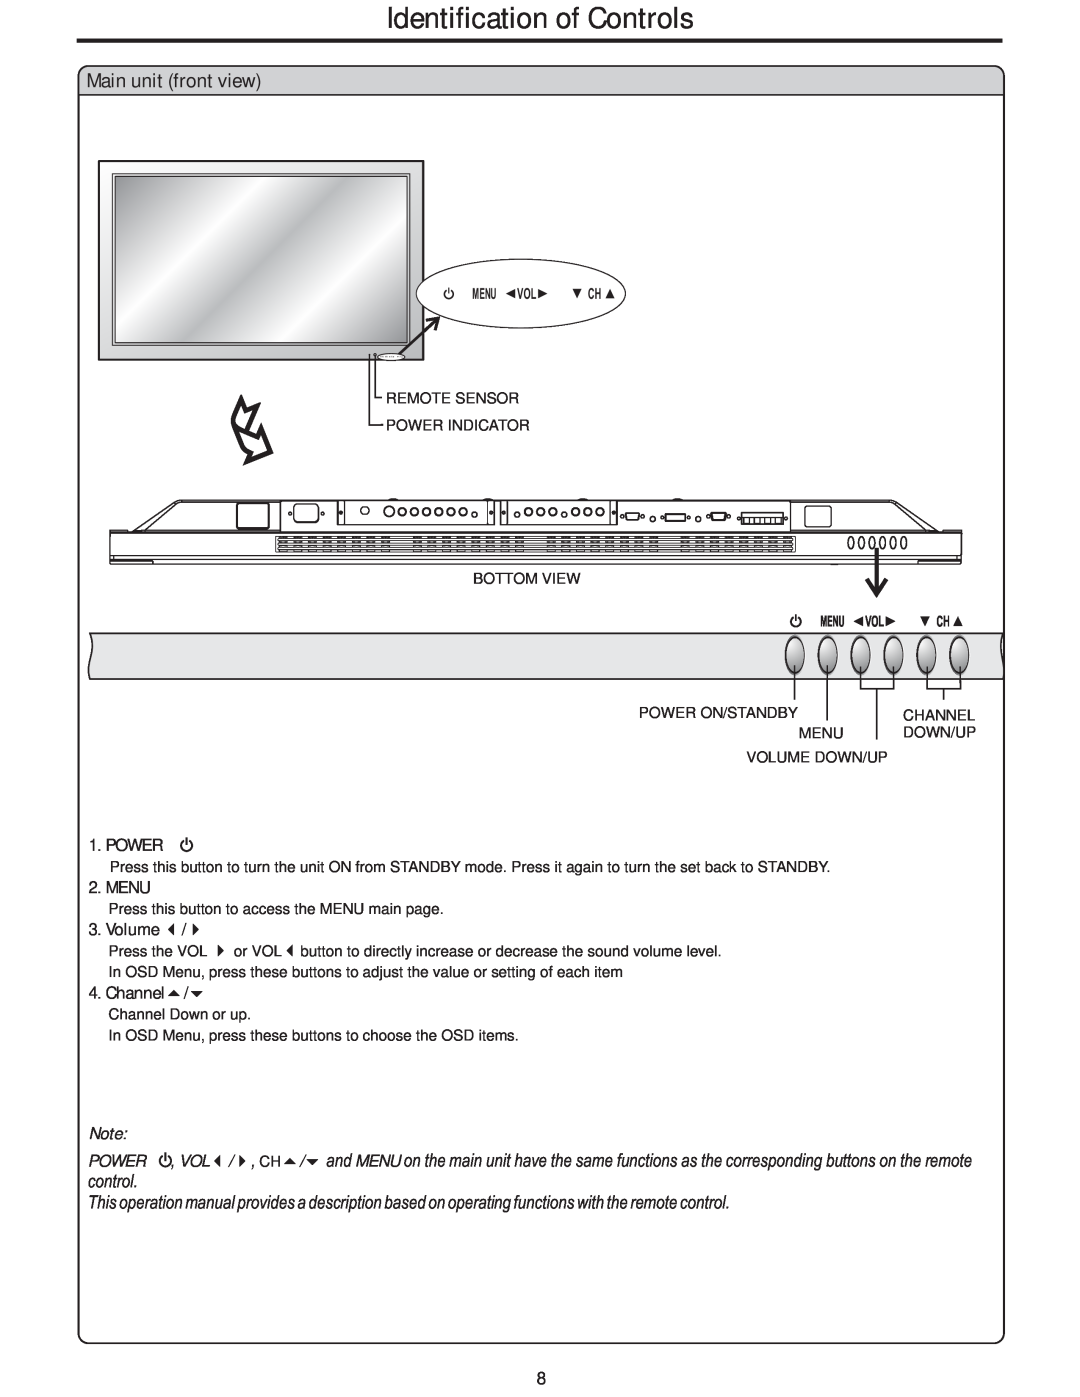 Polaroid PLA-4248 manual Identification of Controls, Main unit front view 